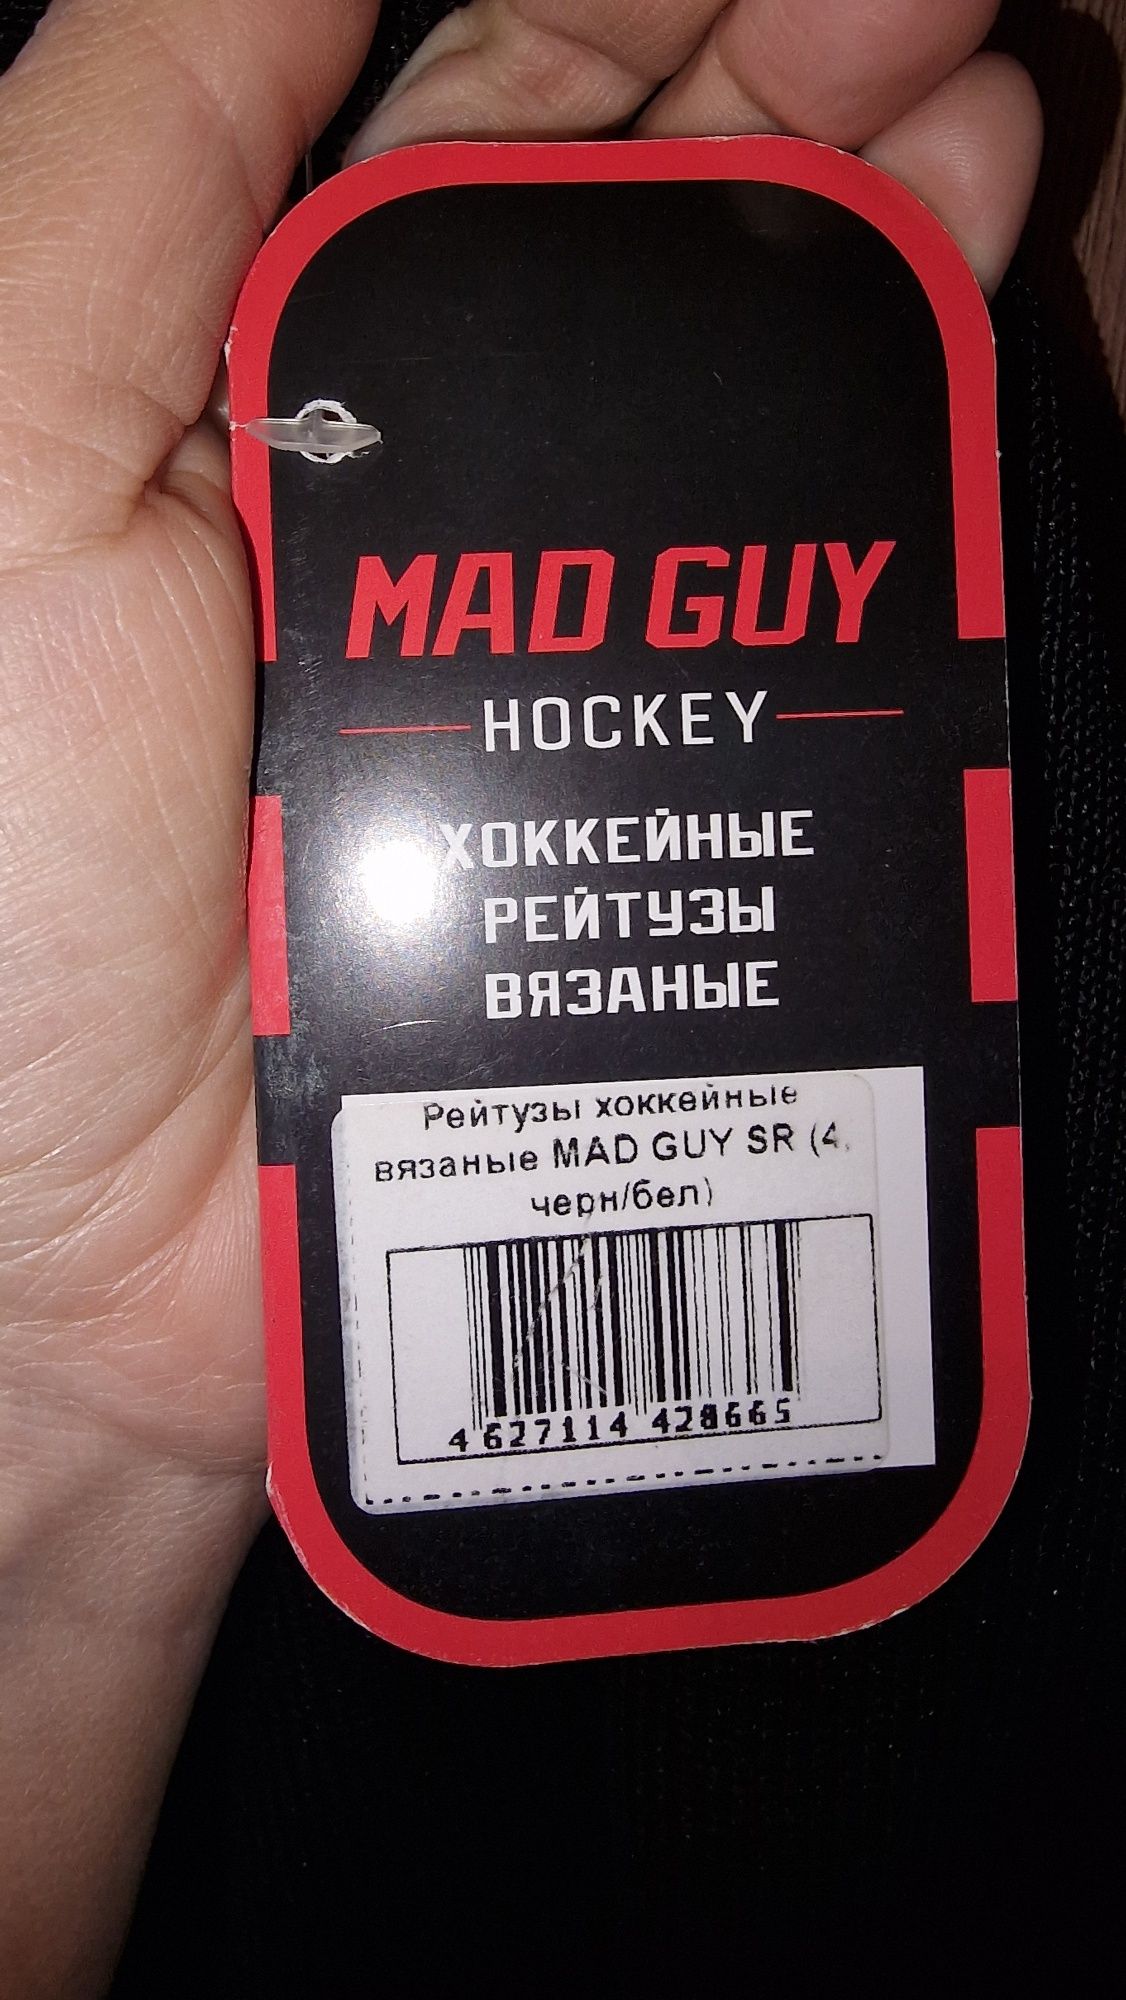 Хоккейные рейтузы вязаные Mad Guy